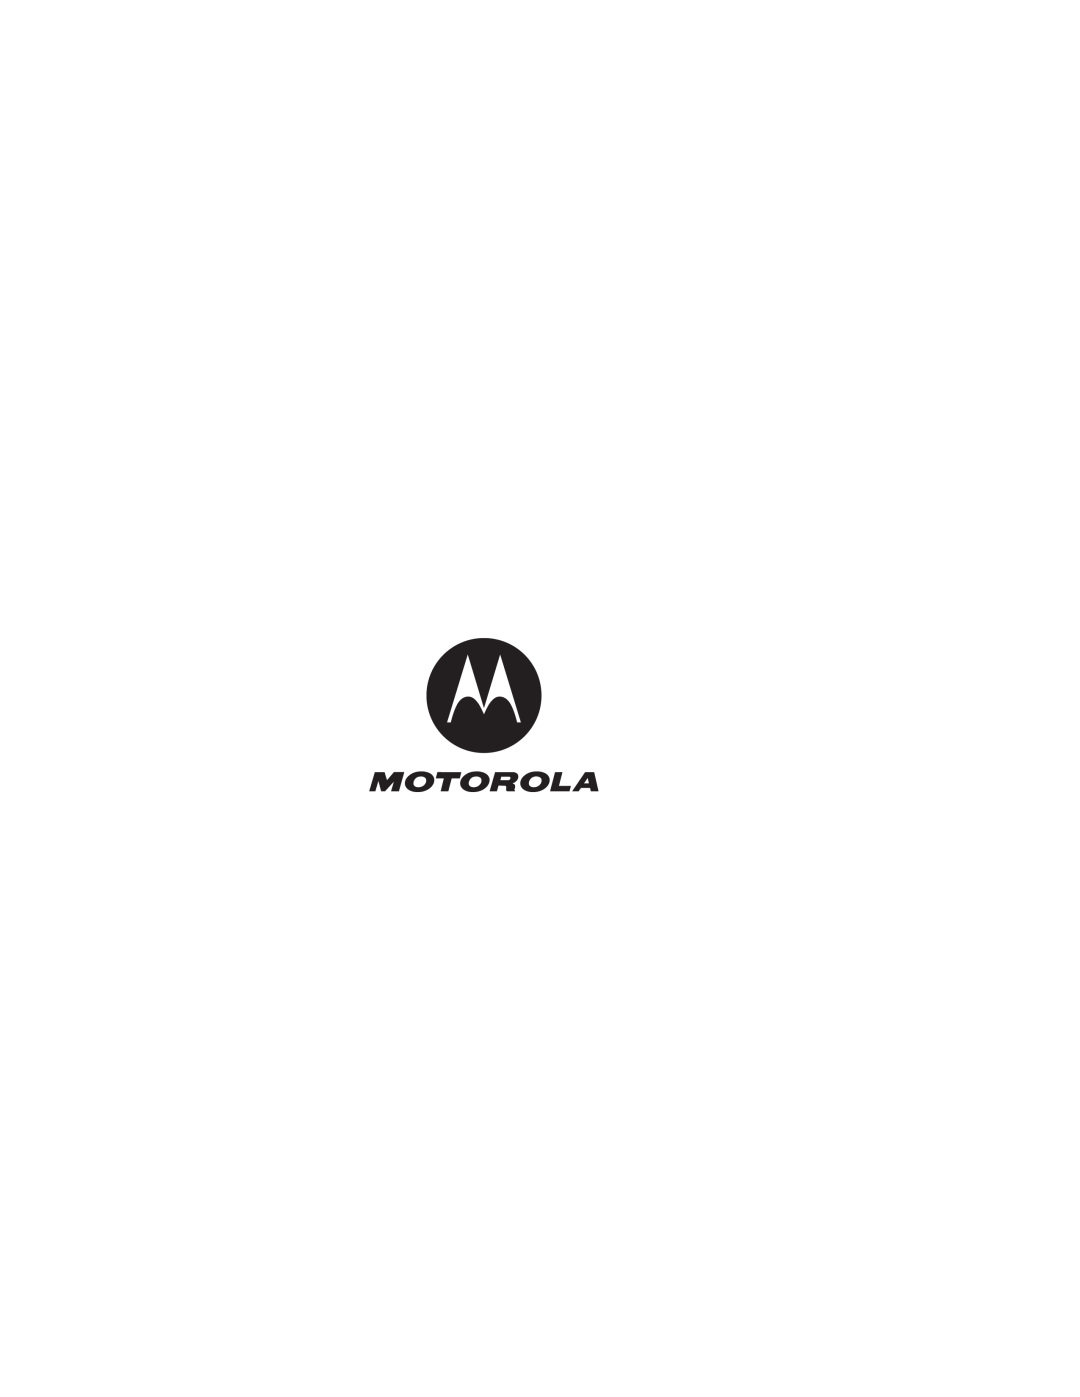 Motorola F3 service manual 